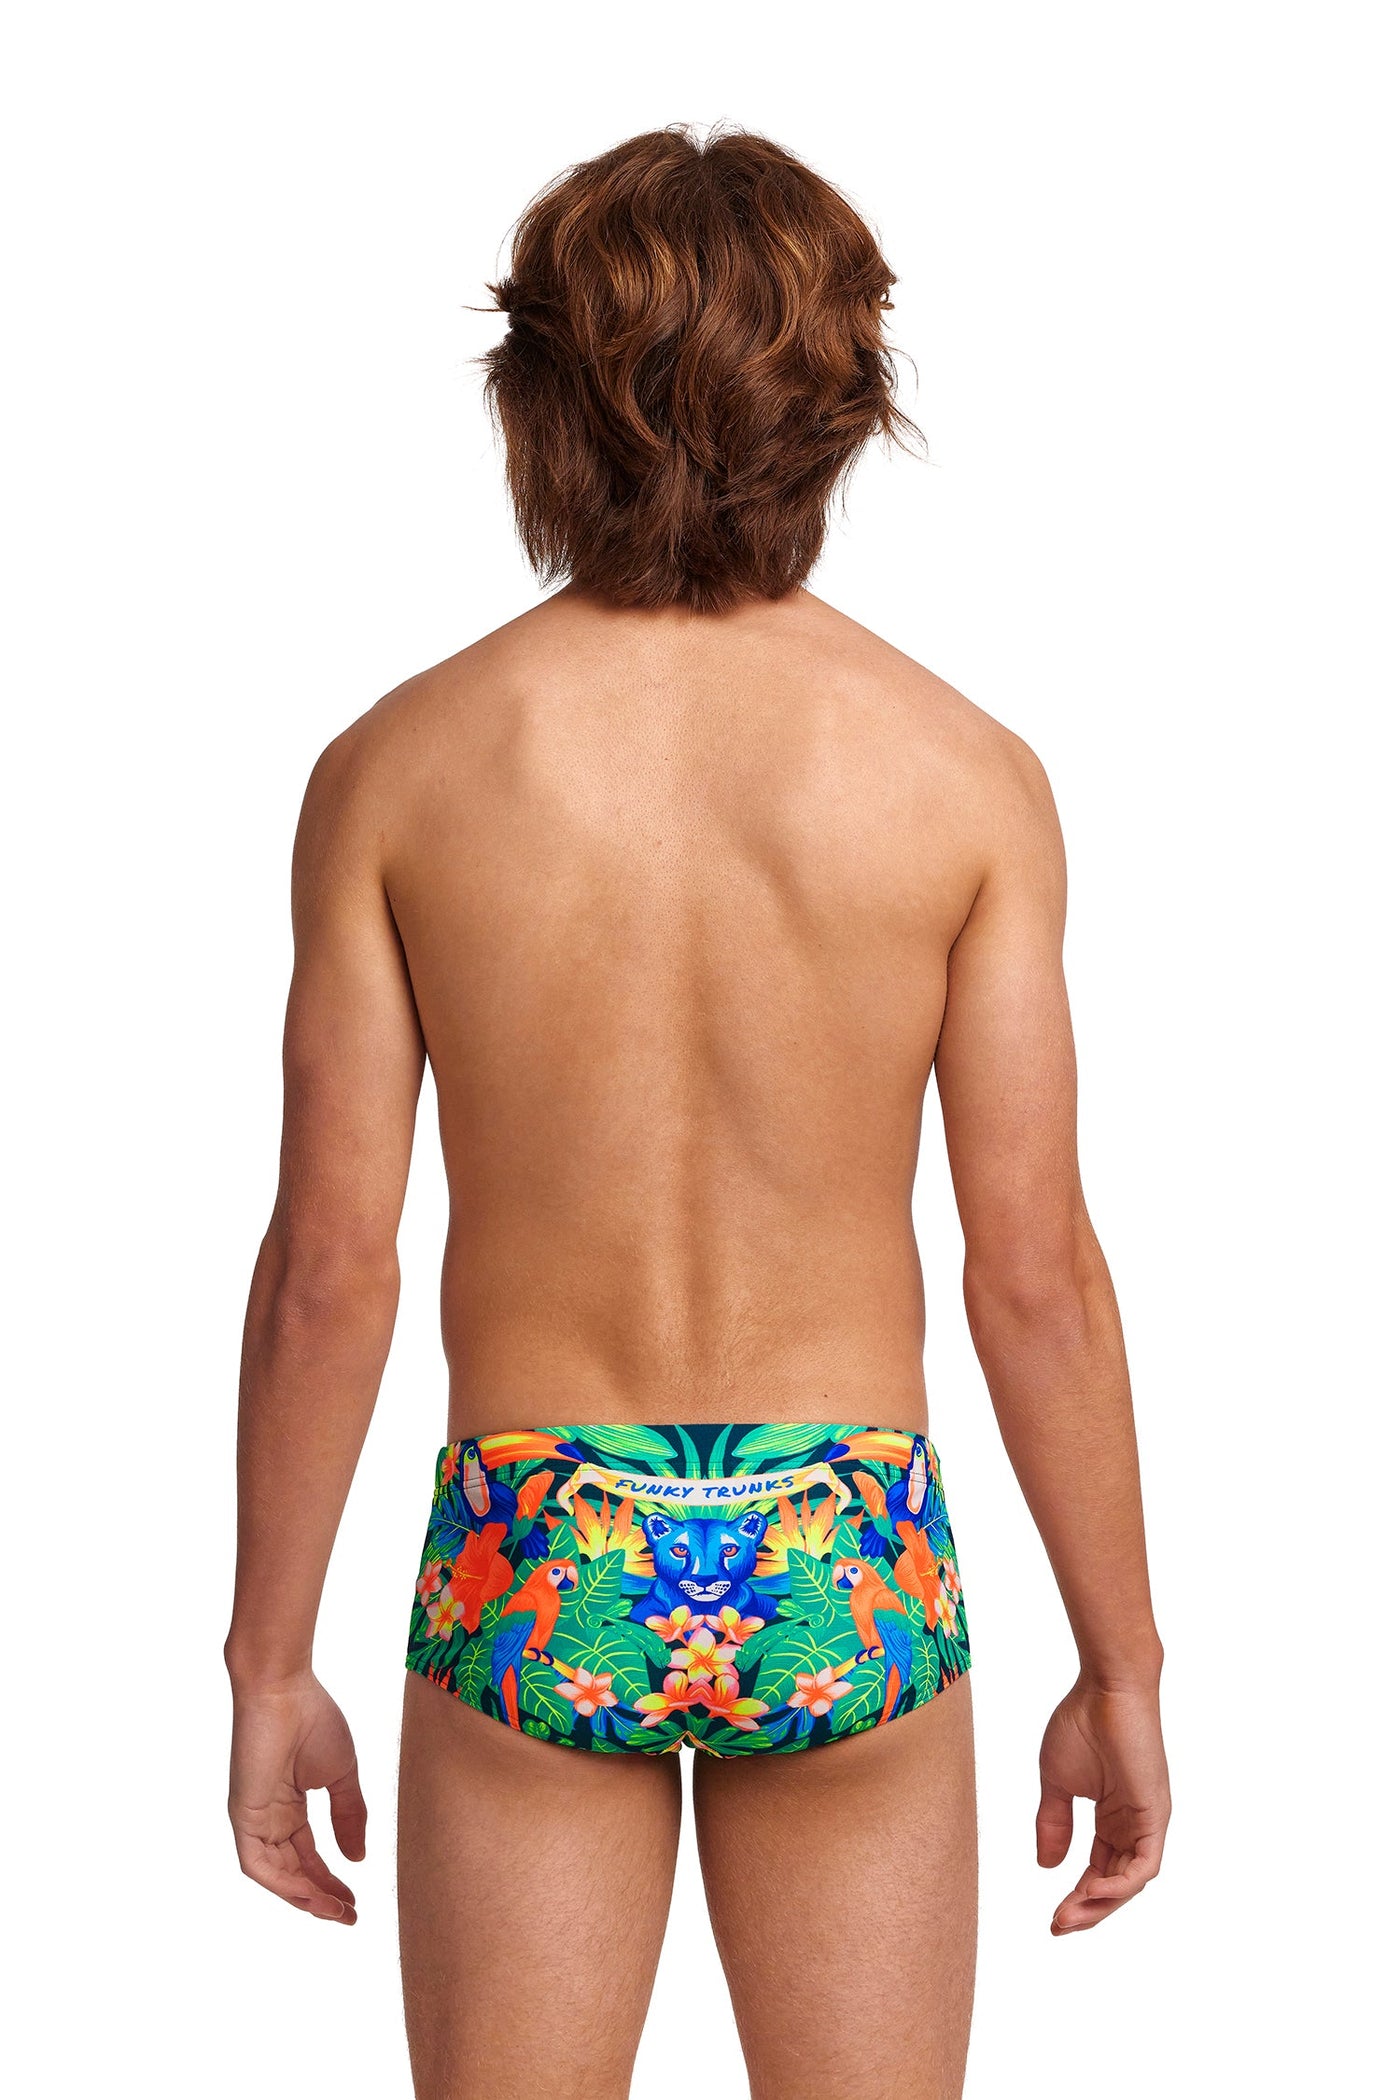 Jungle Town Sidewinder Trunks Swimsuit FTS010B - Boys